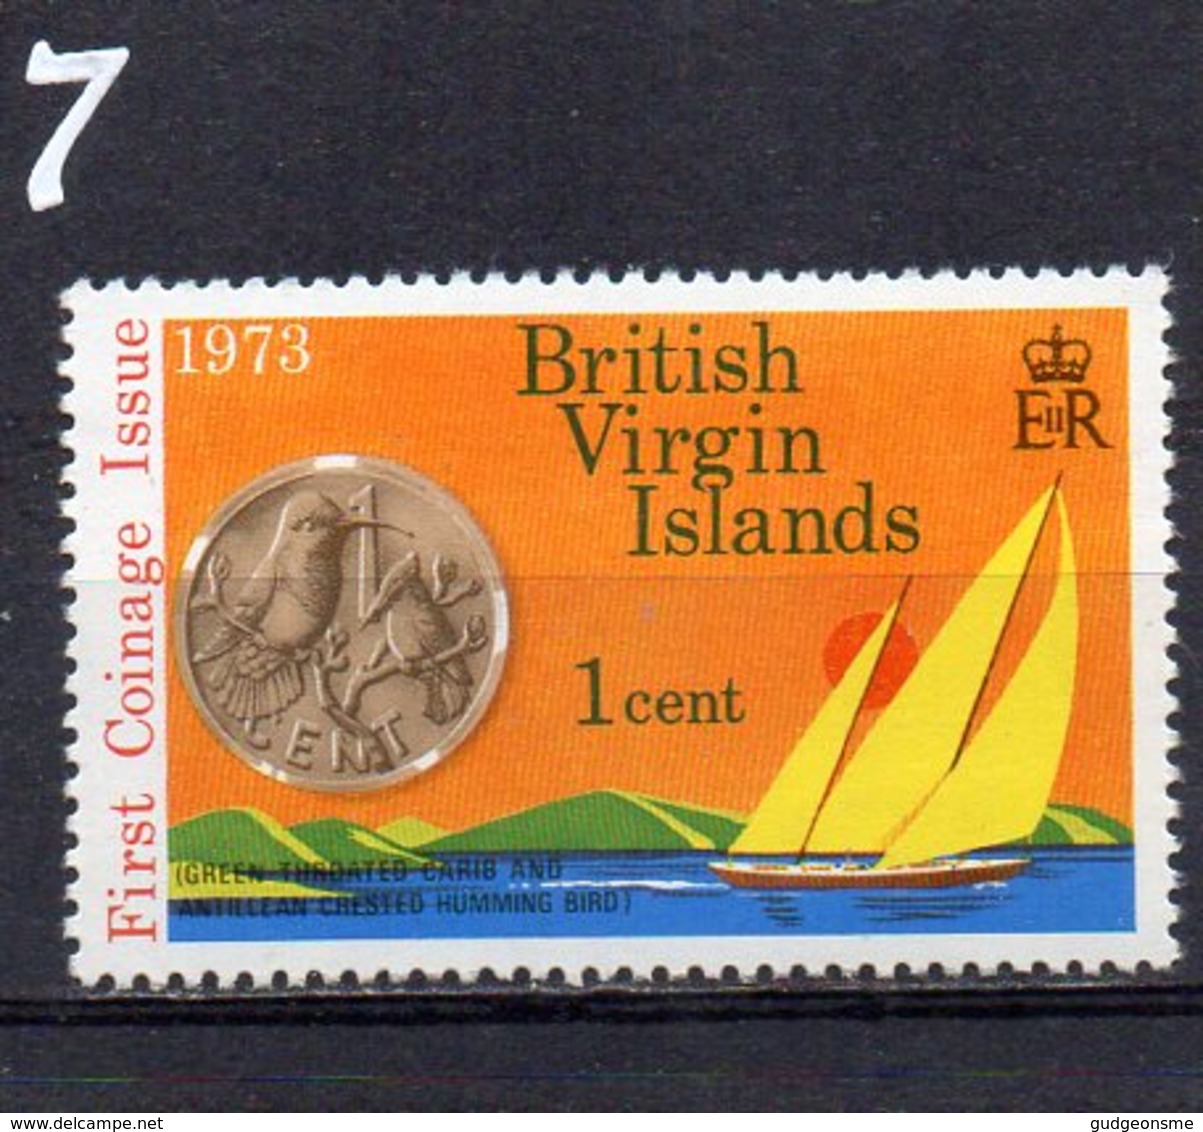 1973 Coinage 1c MNH - British Virgin Islands